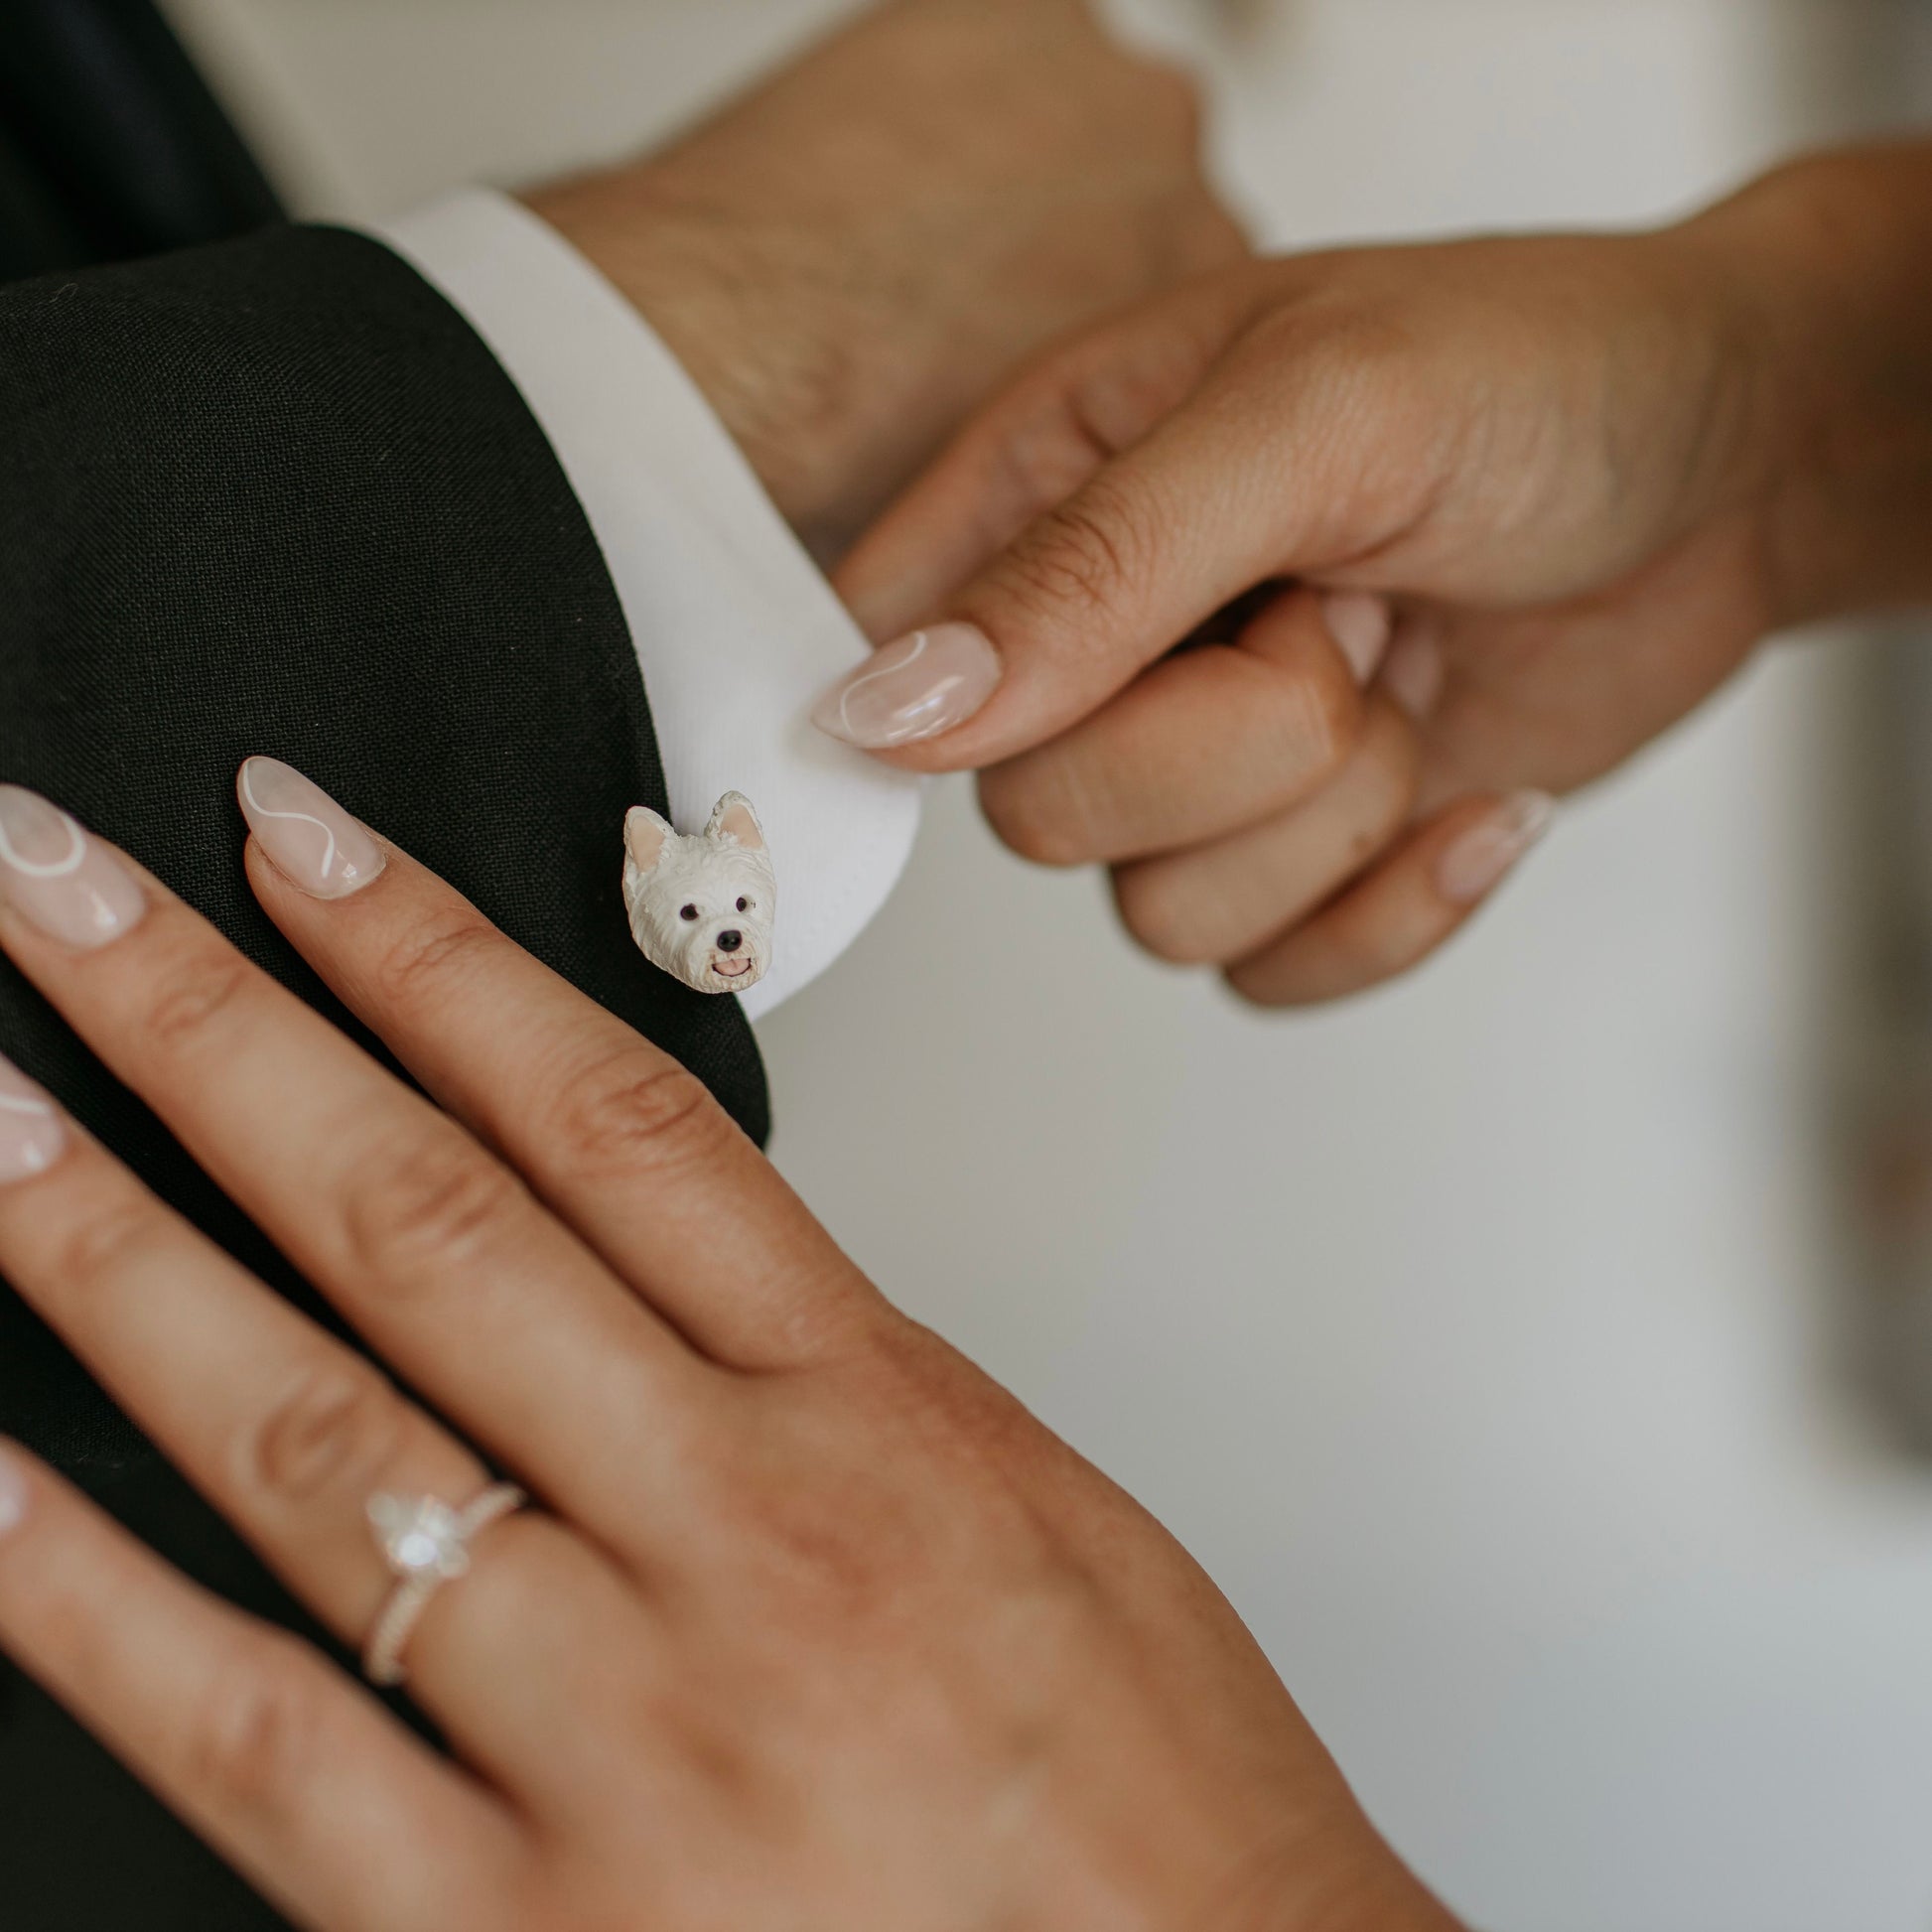 Custom westie dog cufflinks being adjusted by a bride on the groom's sleeve.